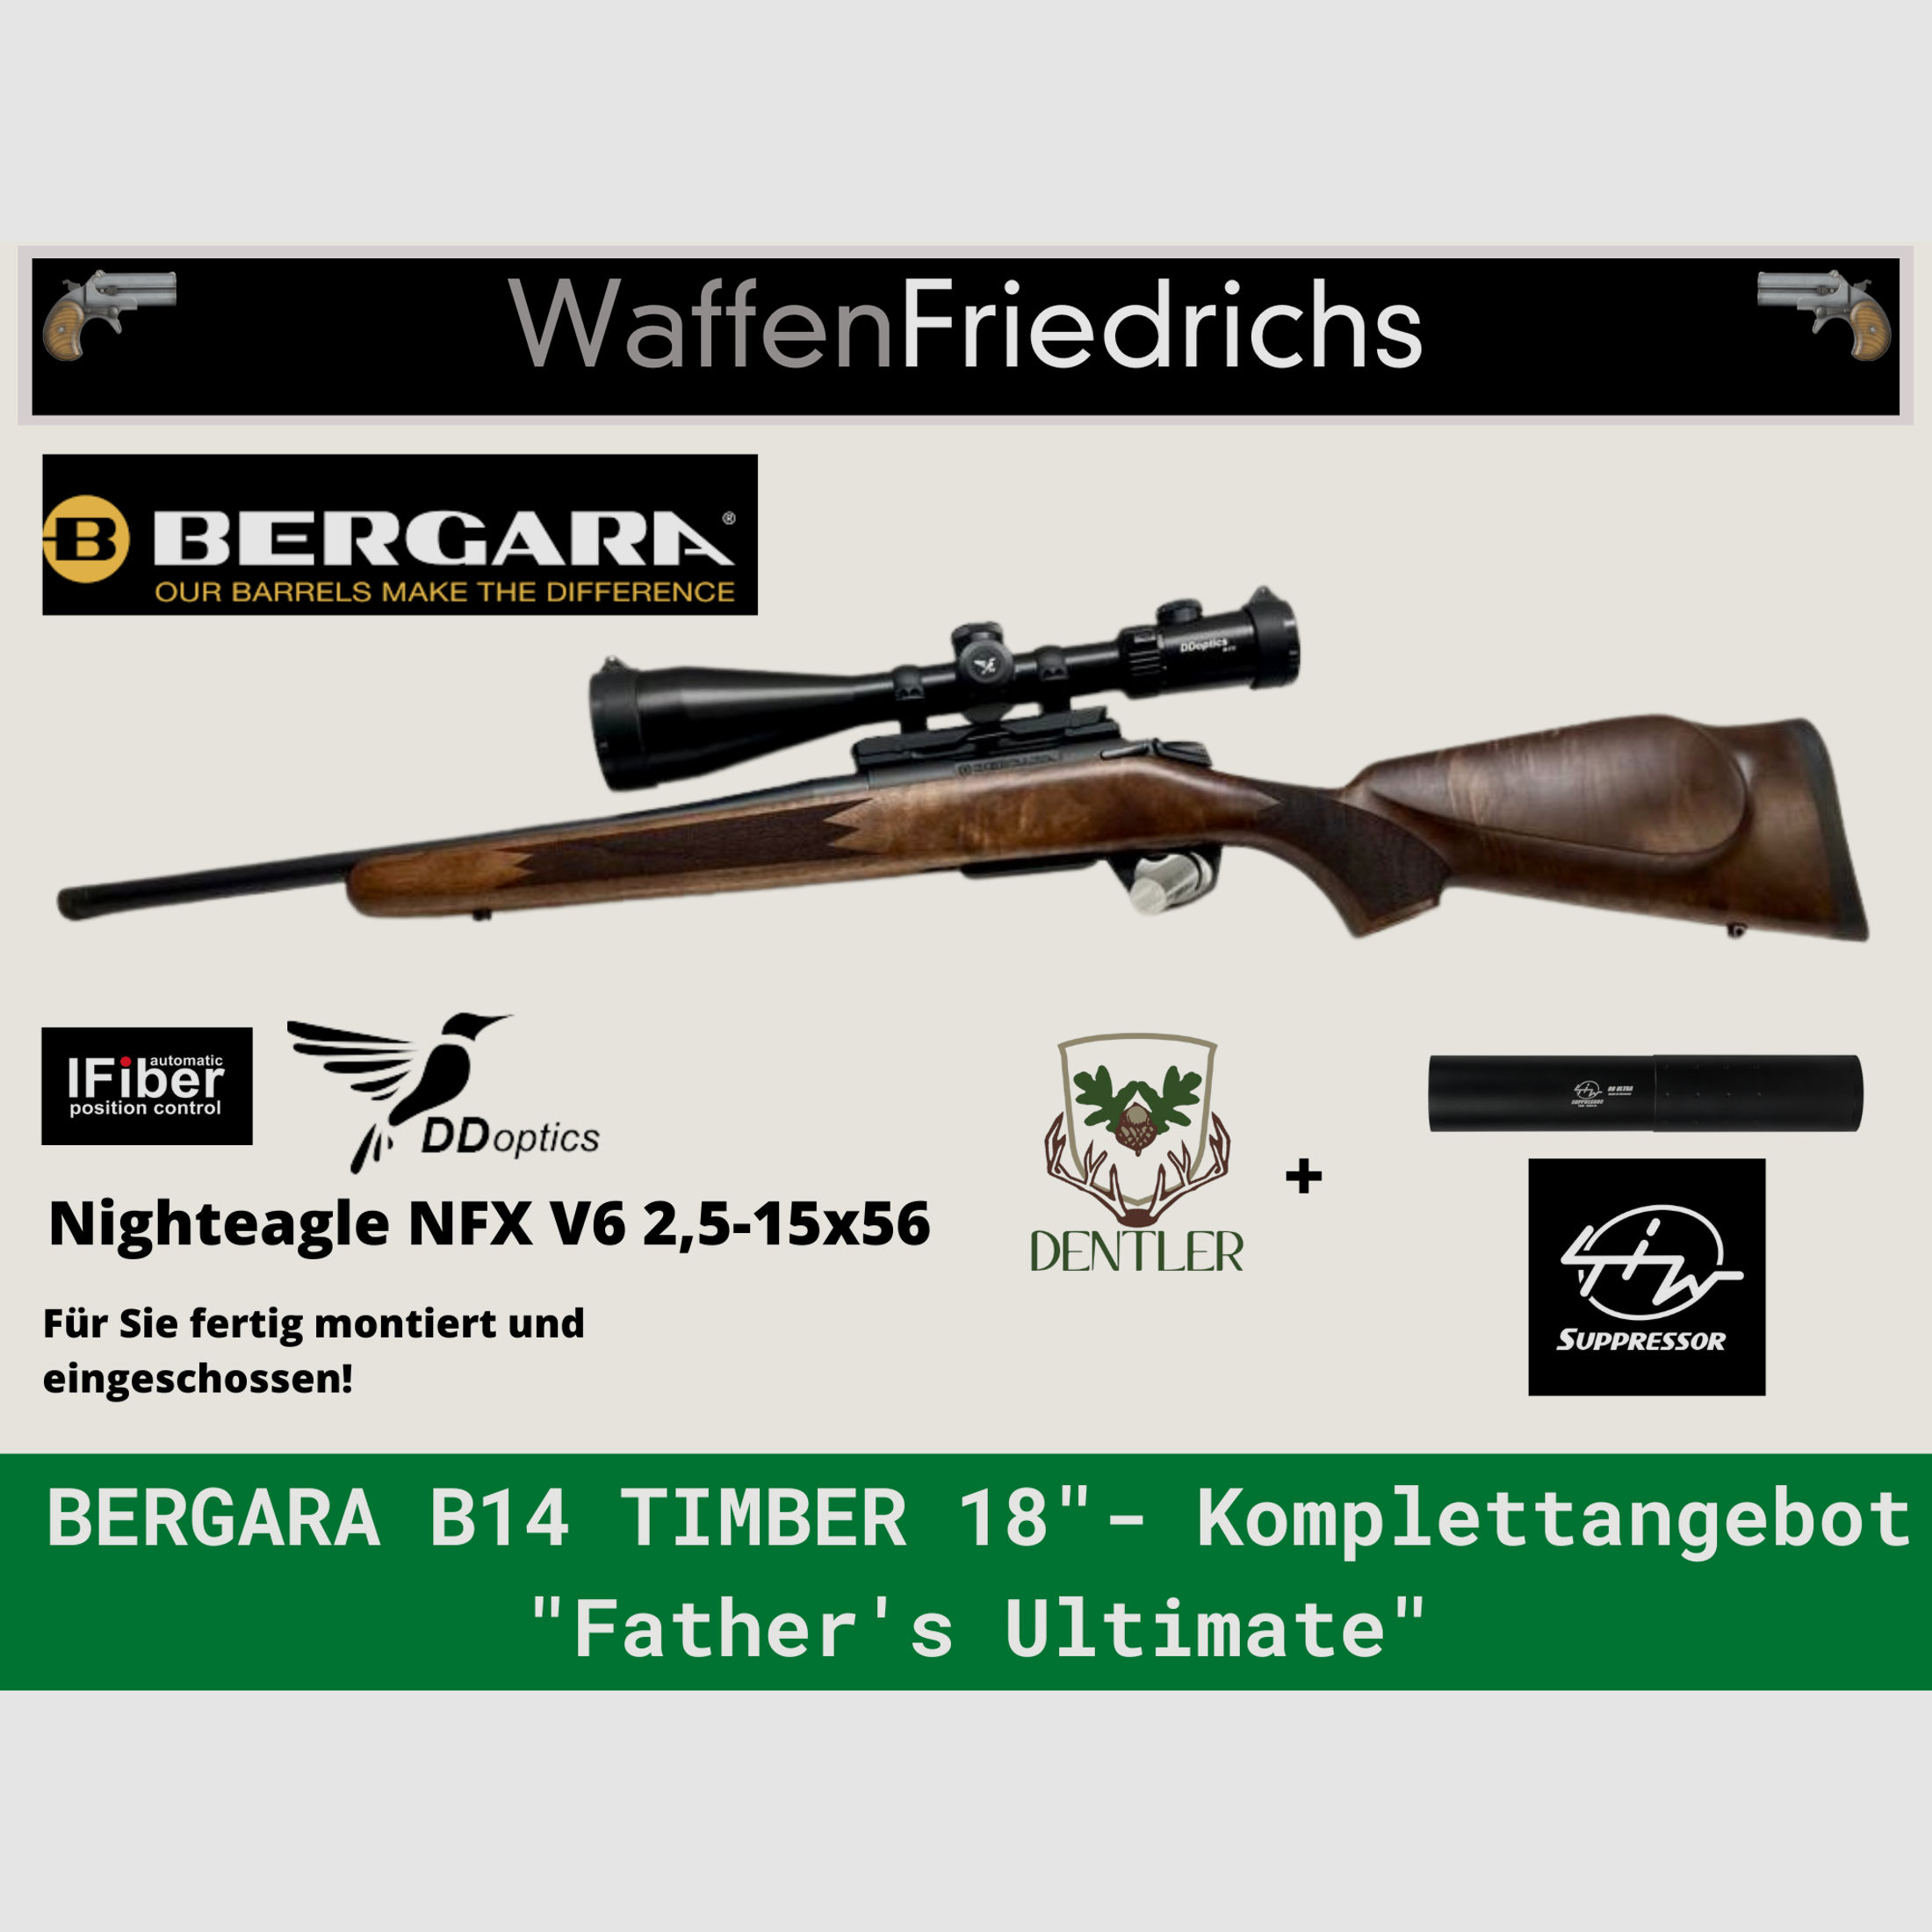 Bergara B14 Timber 18" EXKLUSIV Komplettangebot | Father´s Ultimate - WaffenFriedrichs